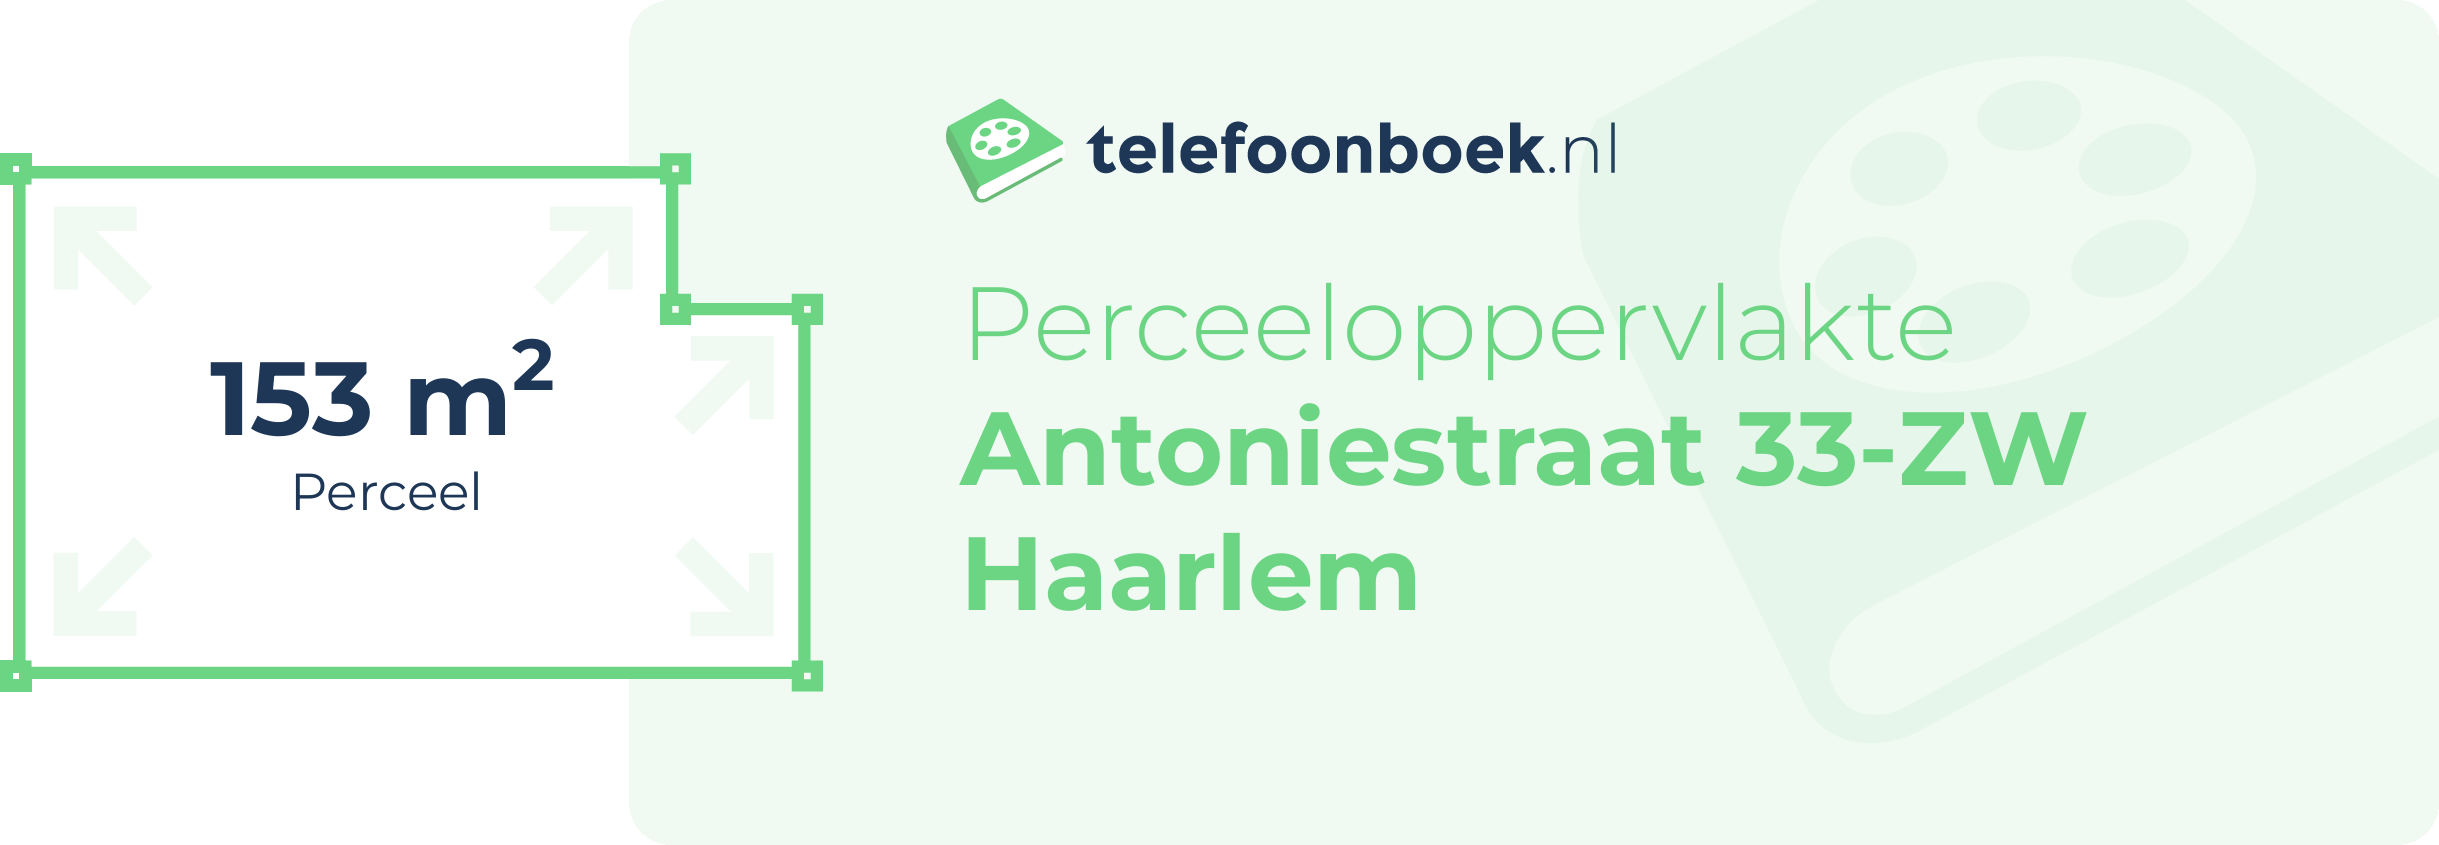 Perceeloppervlakte Antoniestraat 33-ZW Haarlem